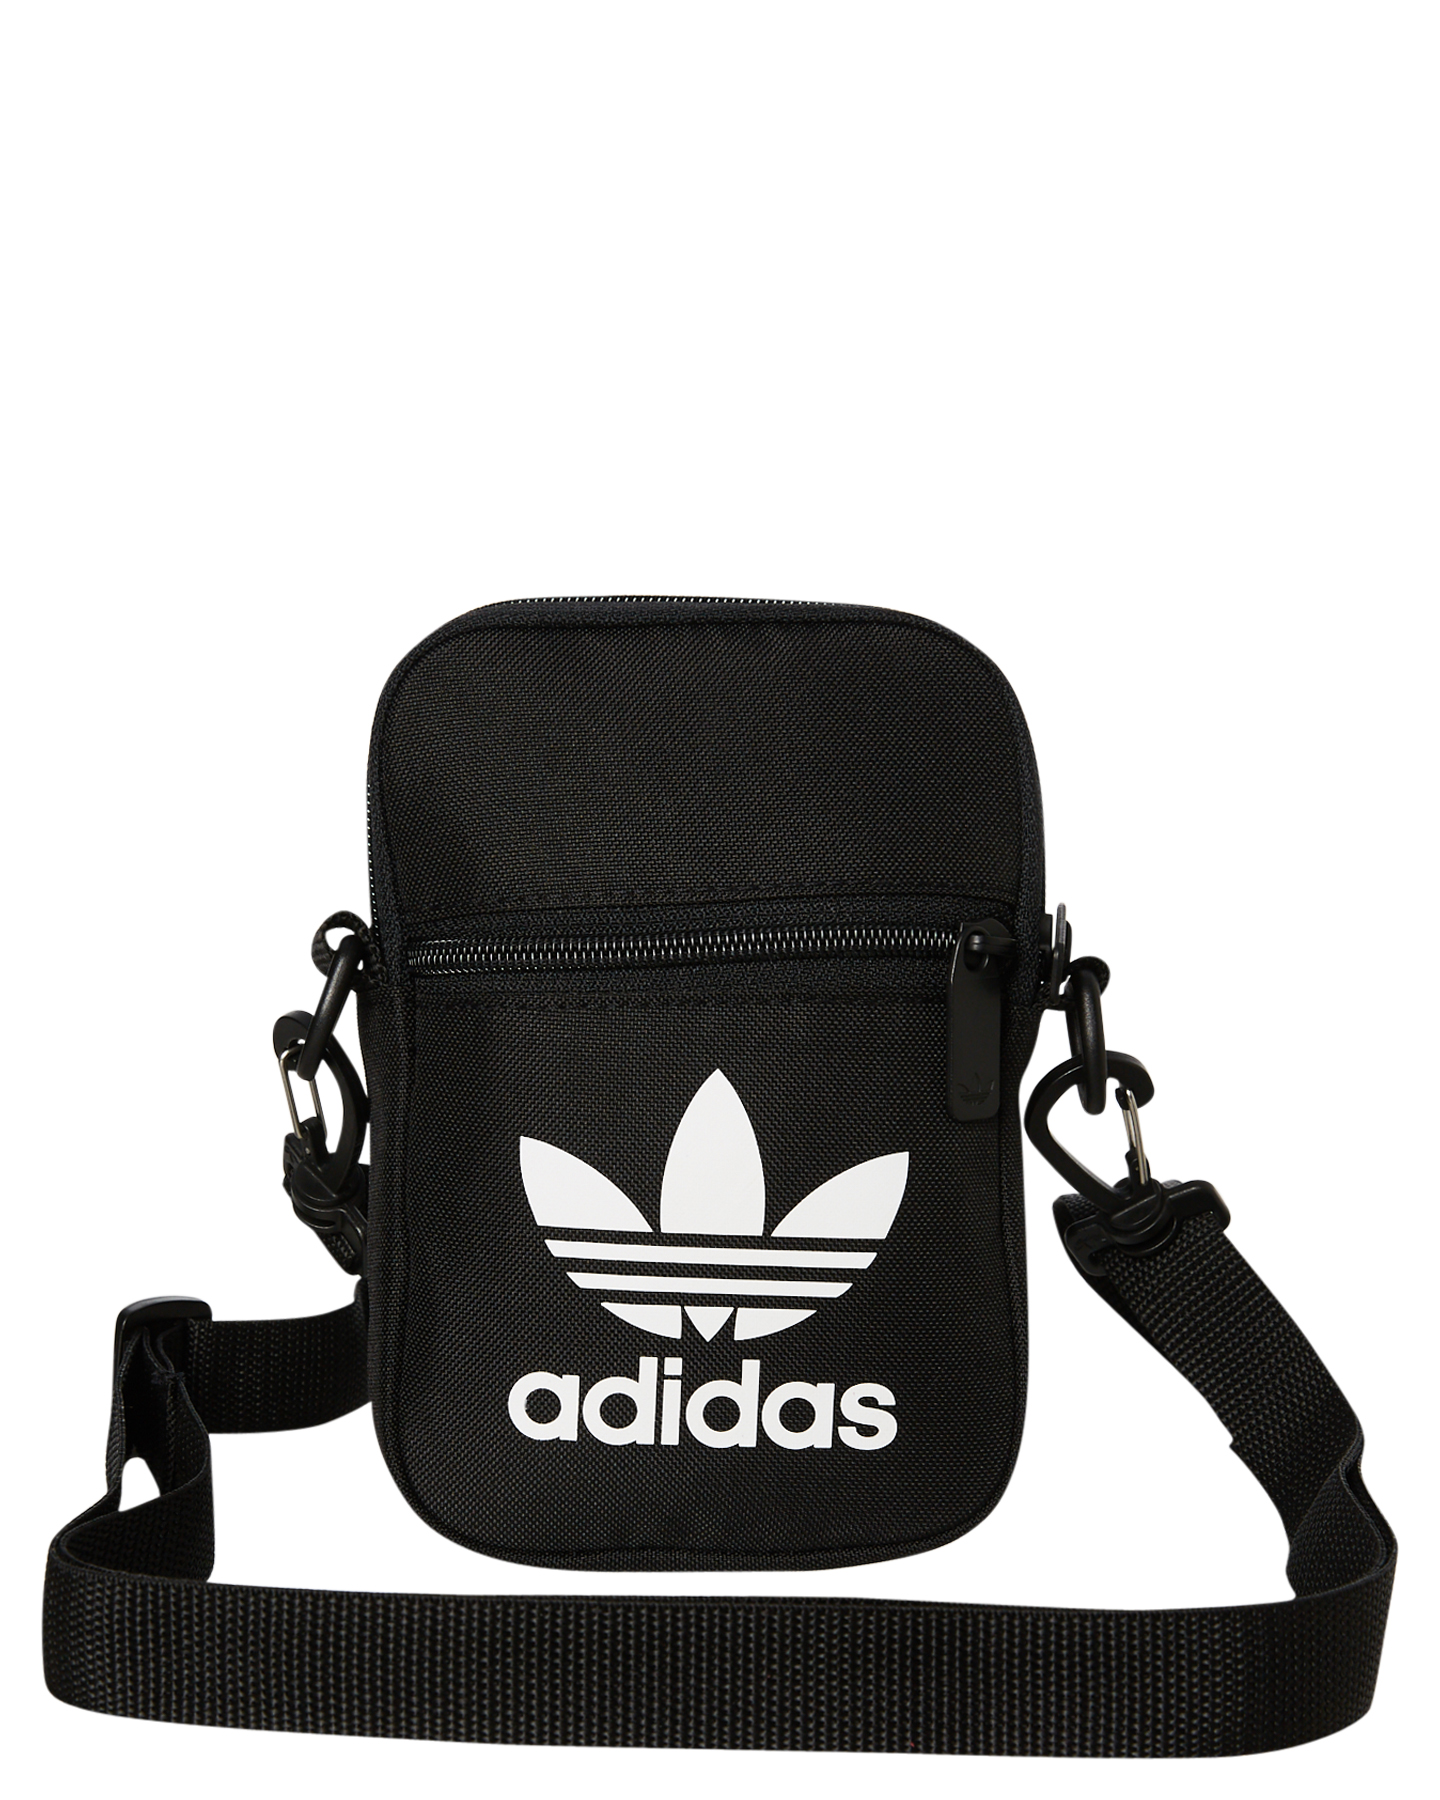 Adidas Fest Bag Trefoil - Black | SurfStitch